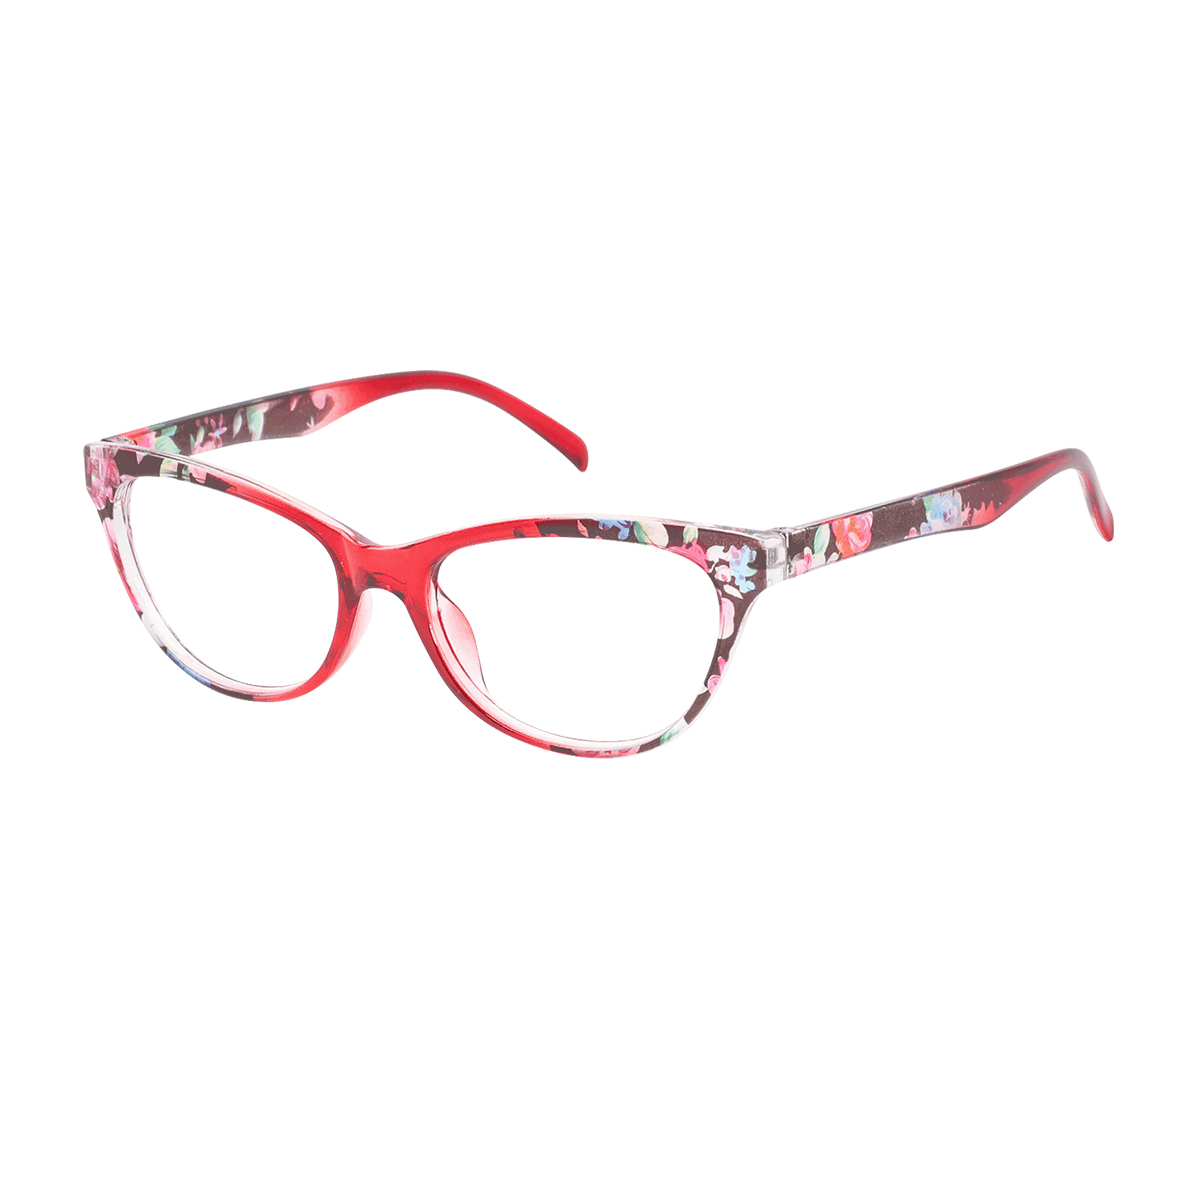 Bonnie - Cat-eye Red Reading Glasses for Women